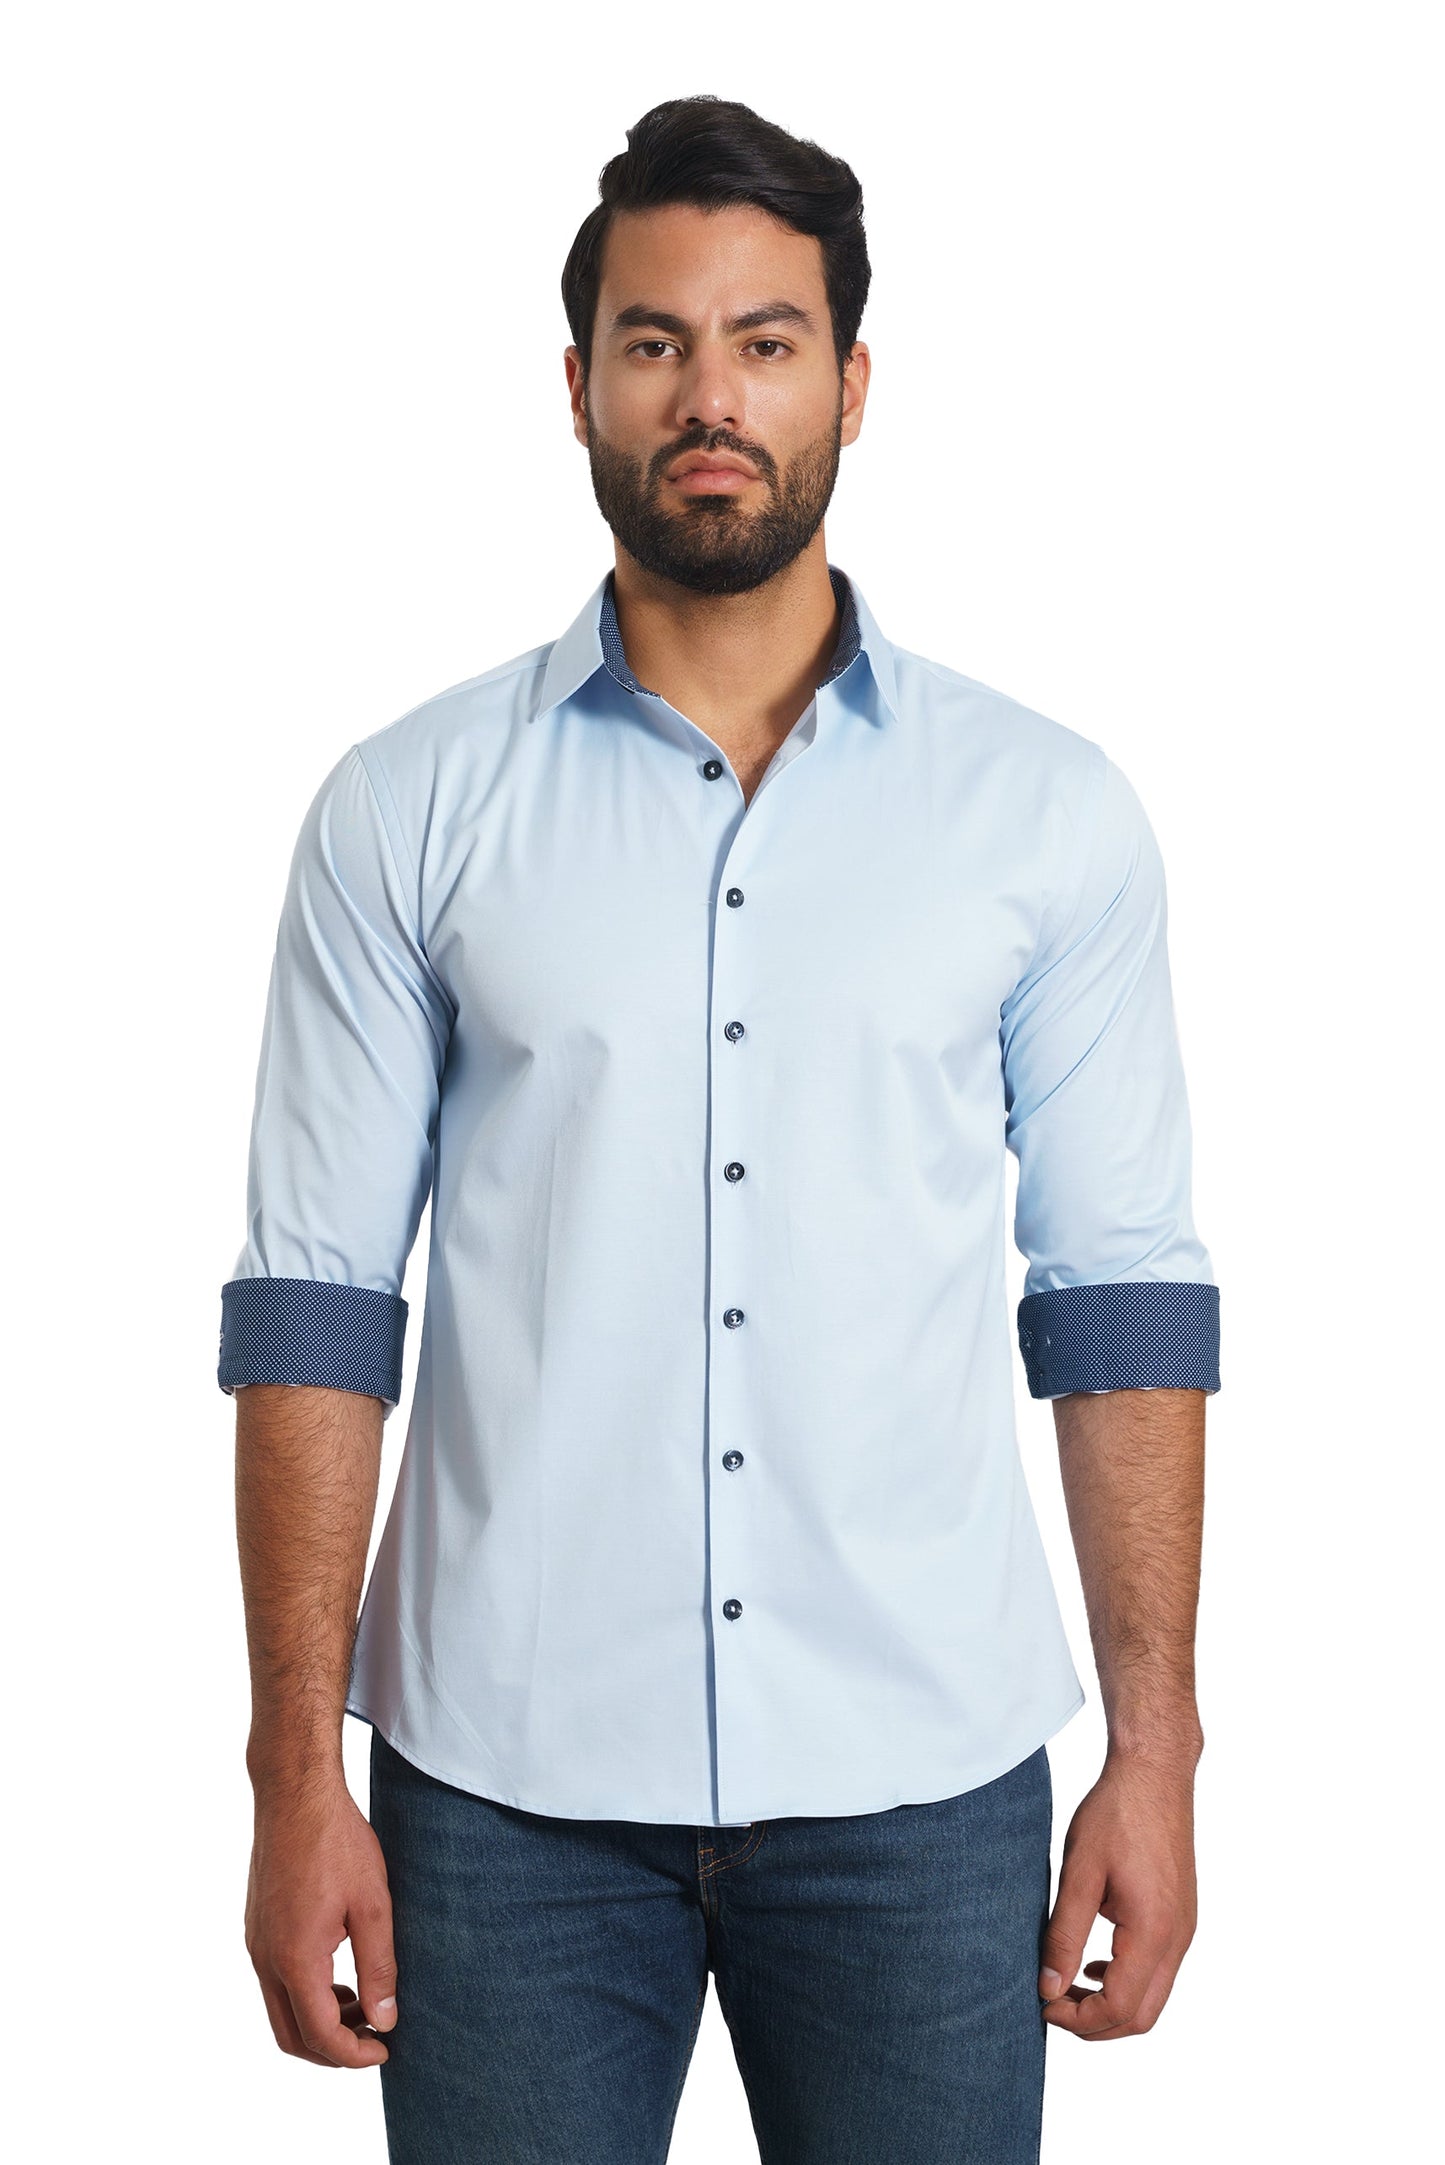 Light Blue Long Sleeve Shirt TH-2872 Front